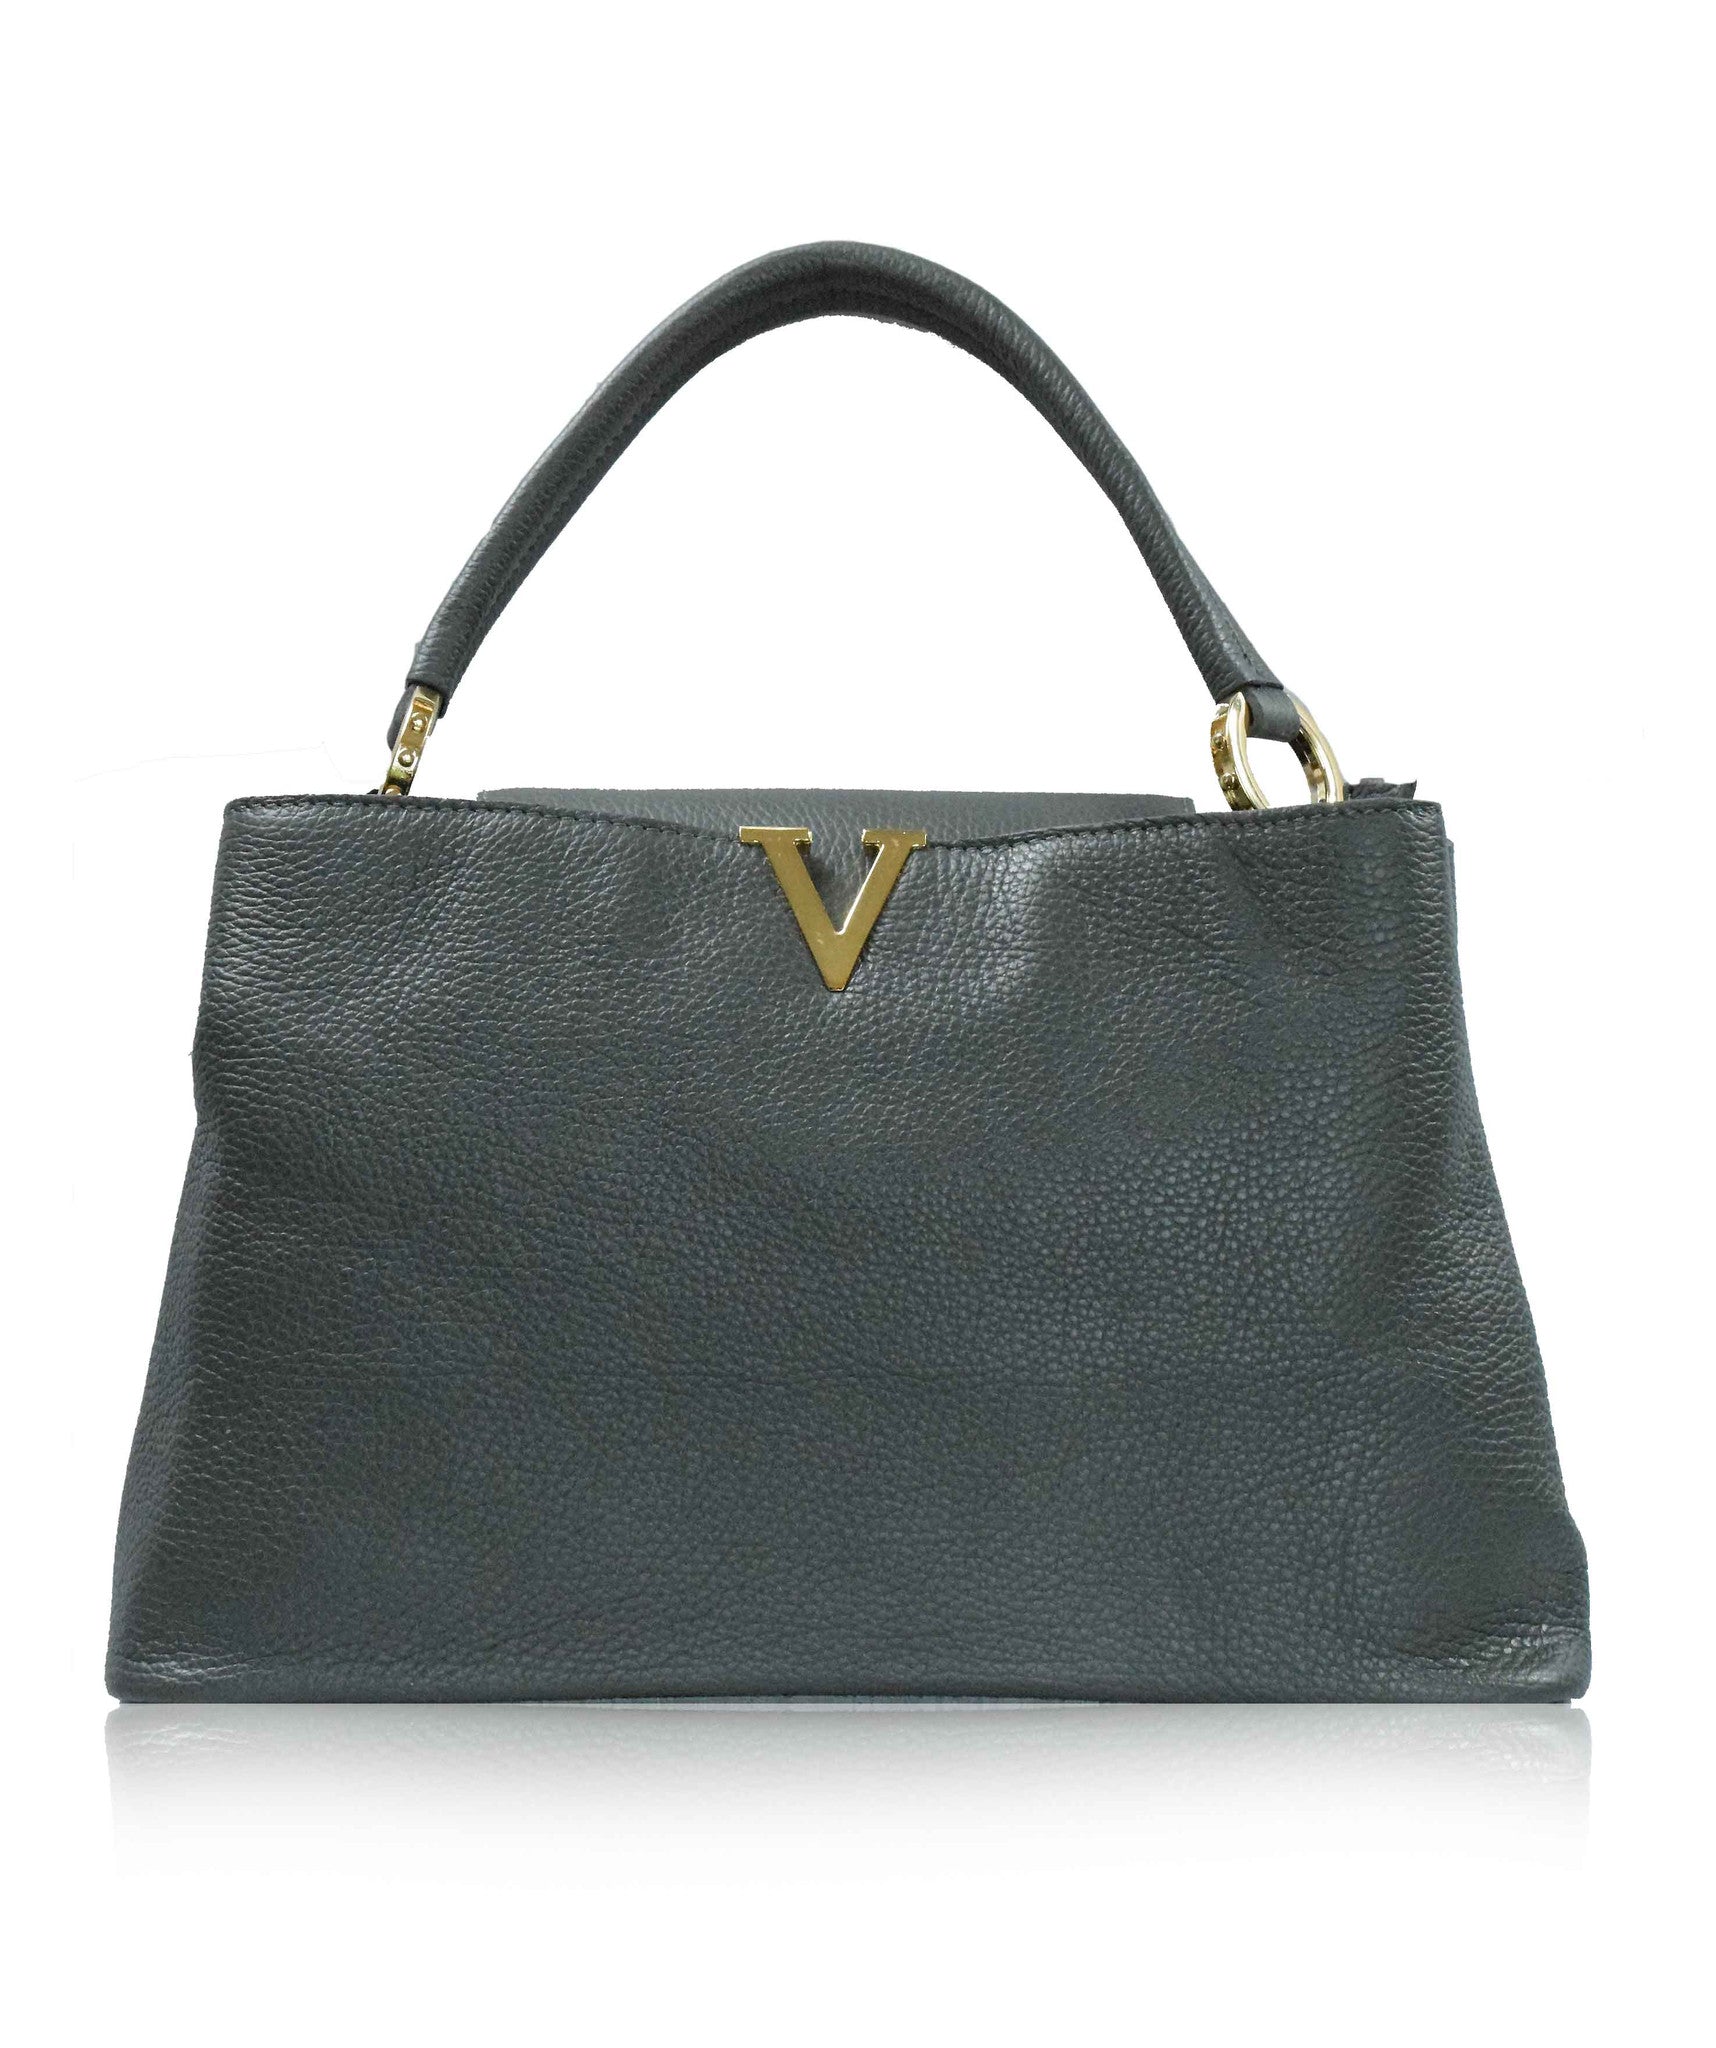 All Styles Of Louis Vuitton Handbags Ahoy Comics